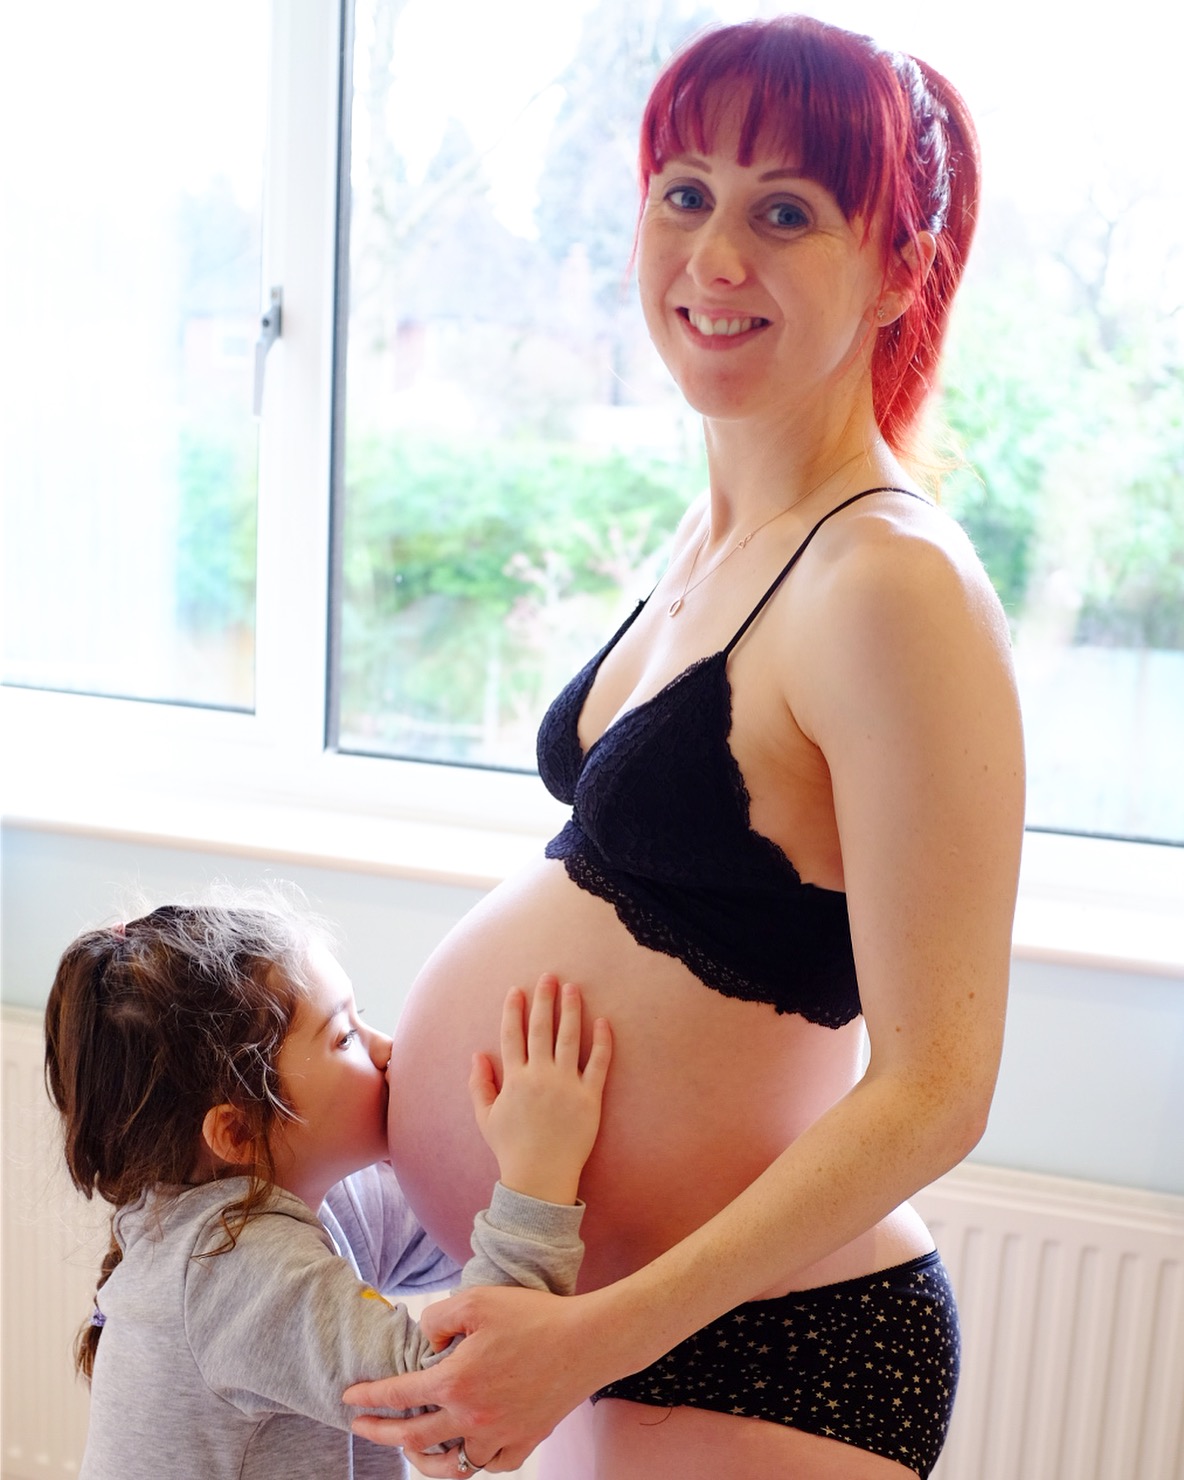 38 Weeks Pregnant – Bump Update